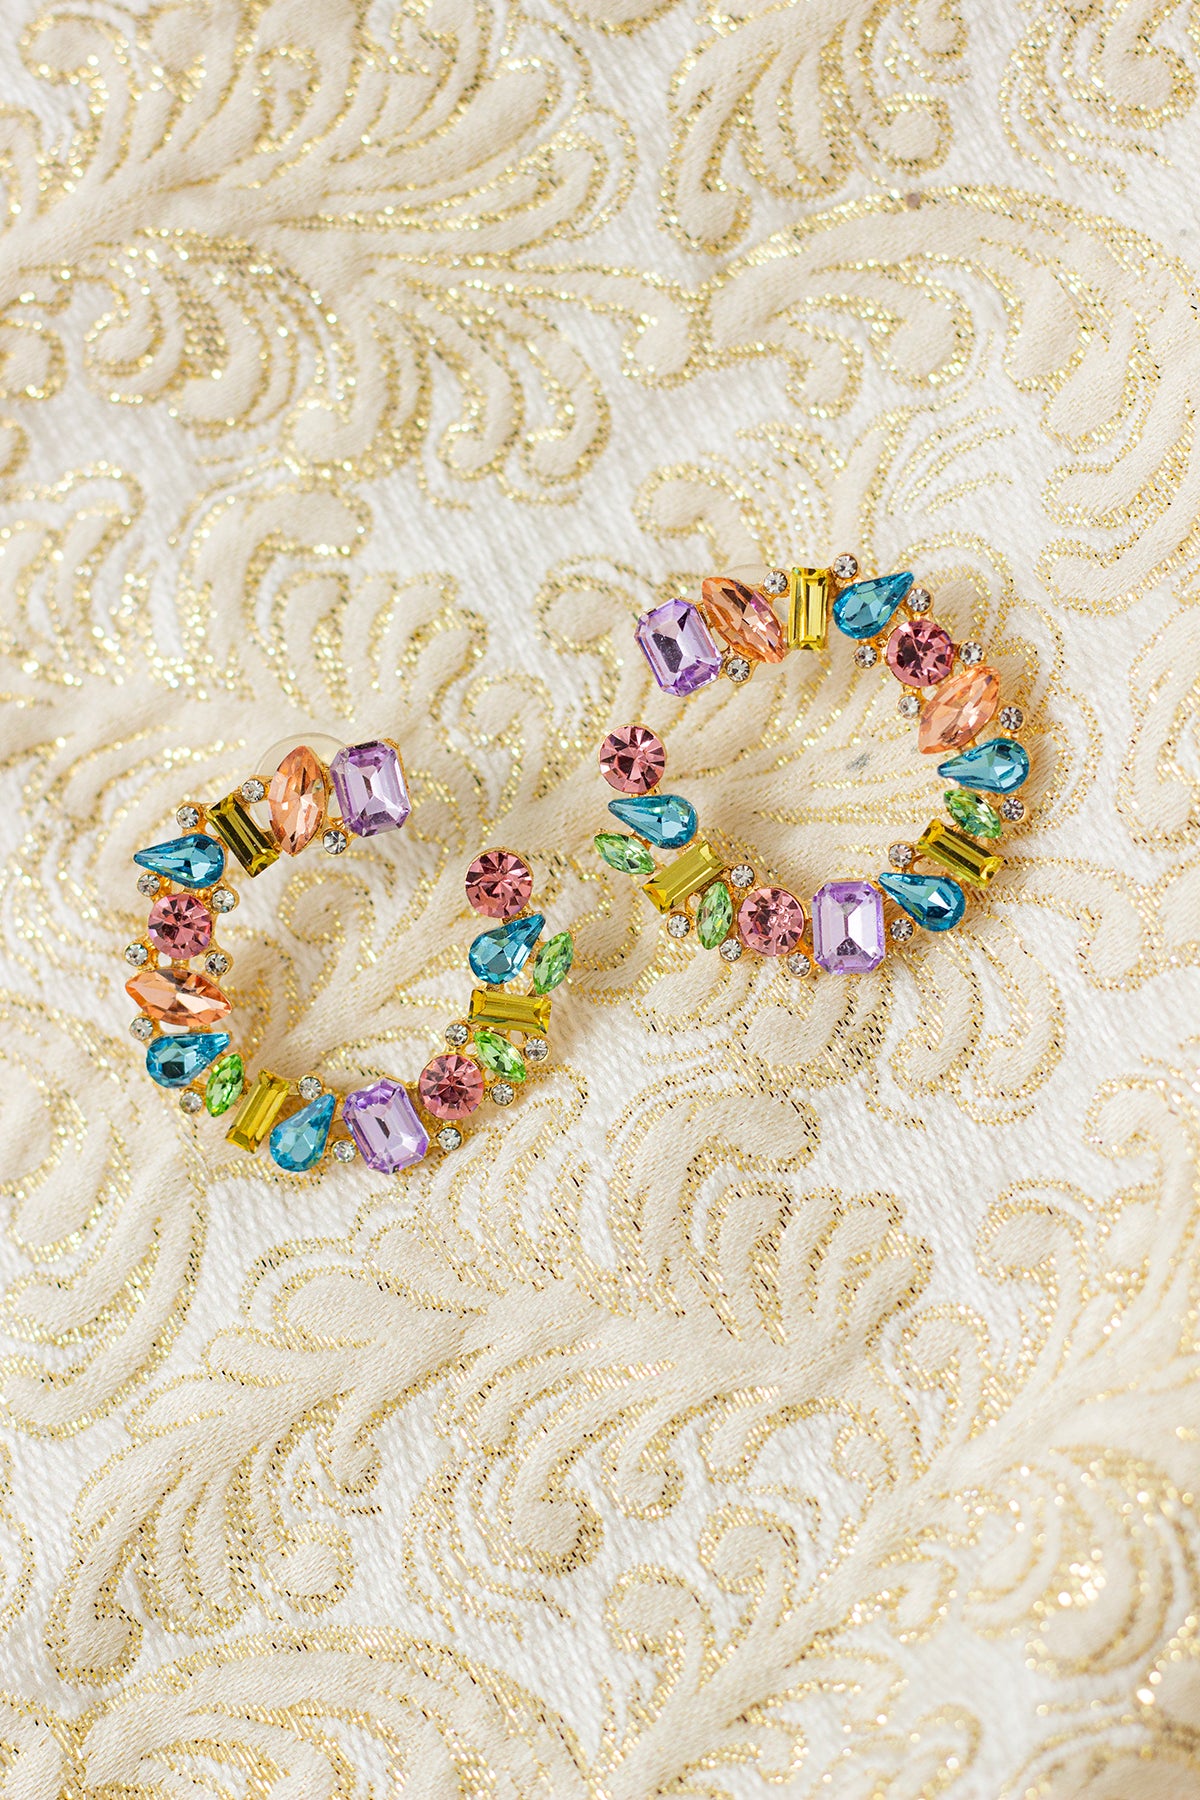 Gem Stone Circle Garland Earrings - Sugar + Style